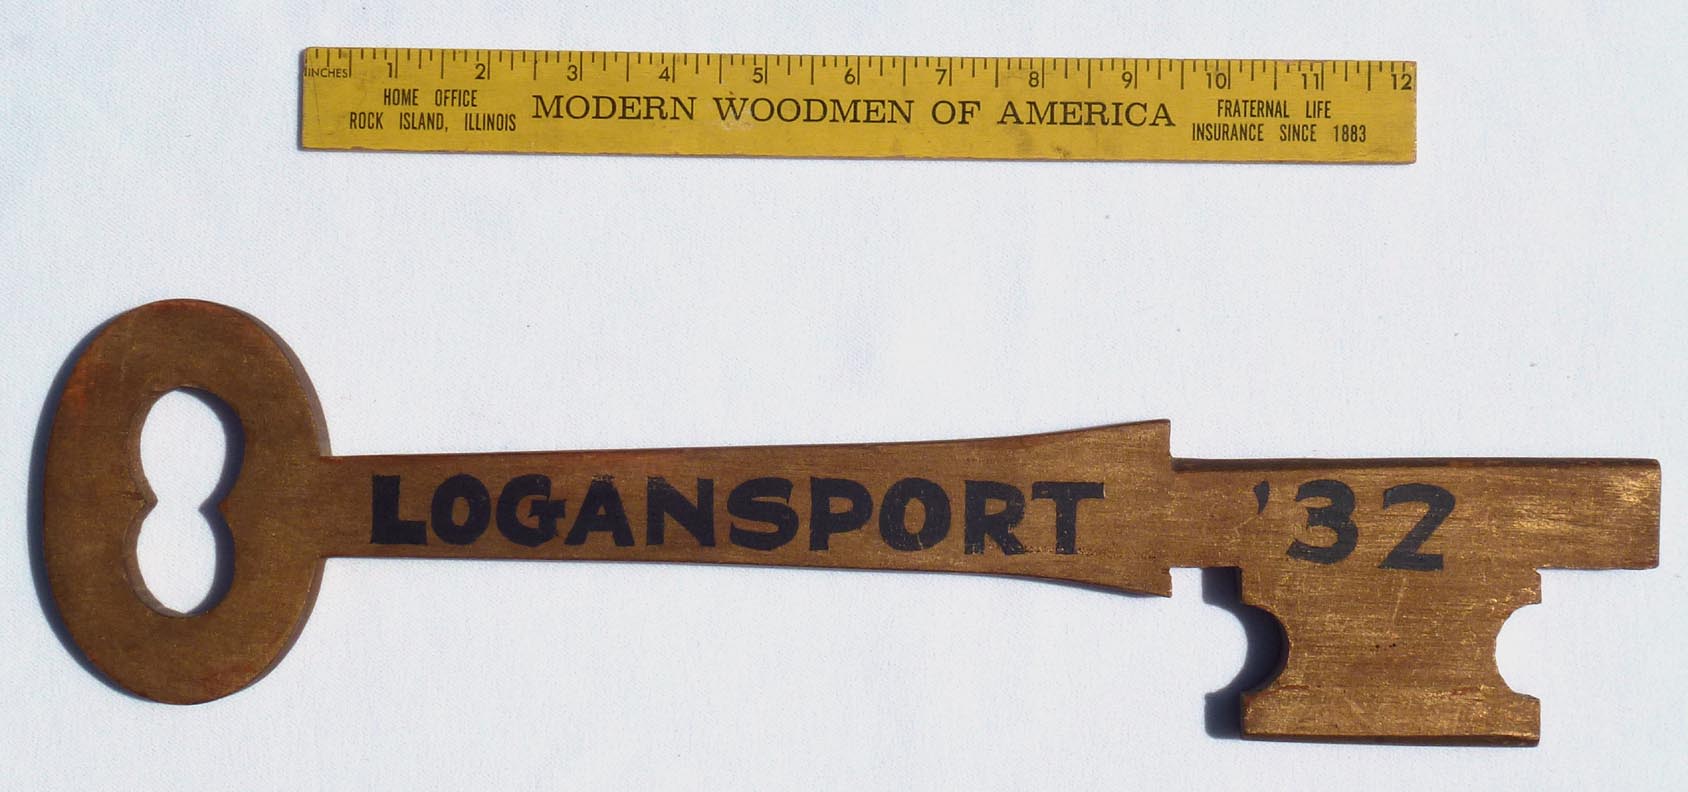 1932 Logansport key